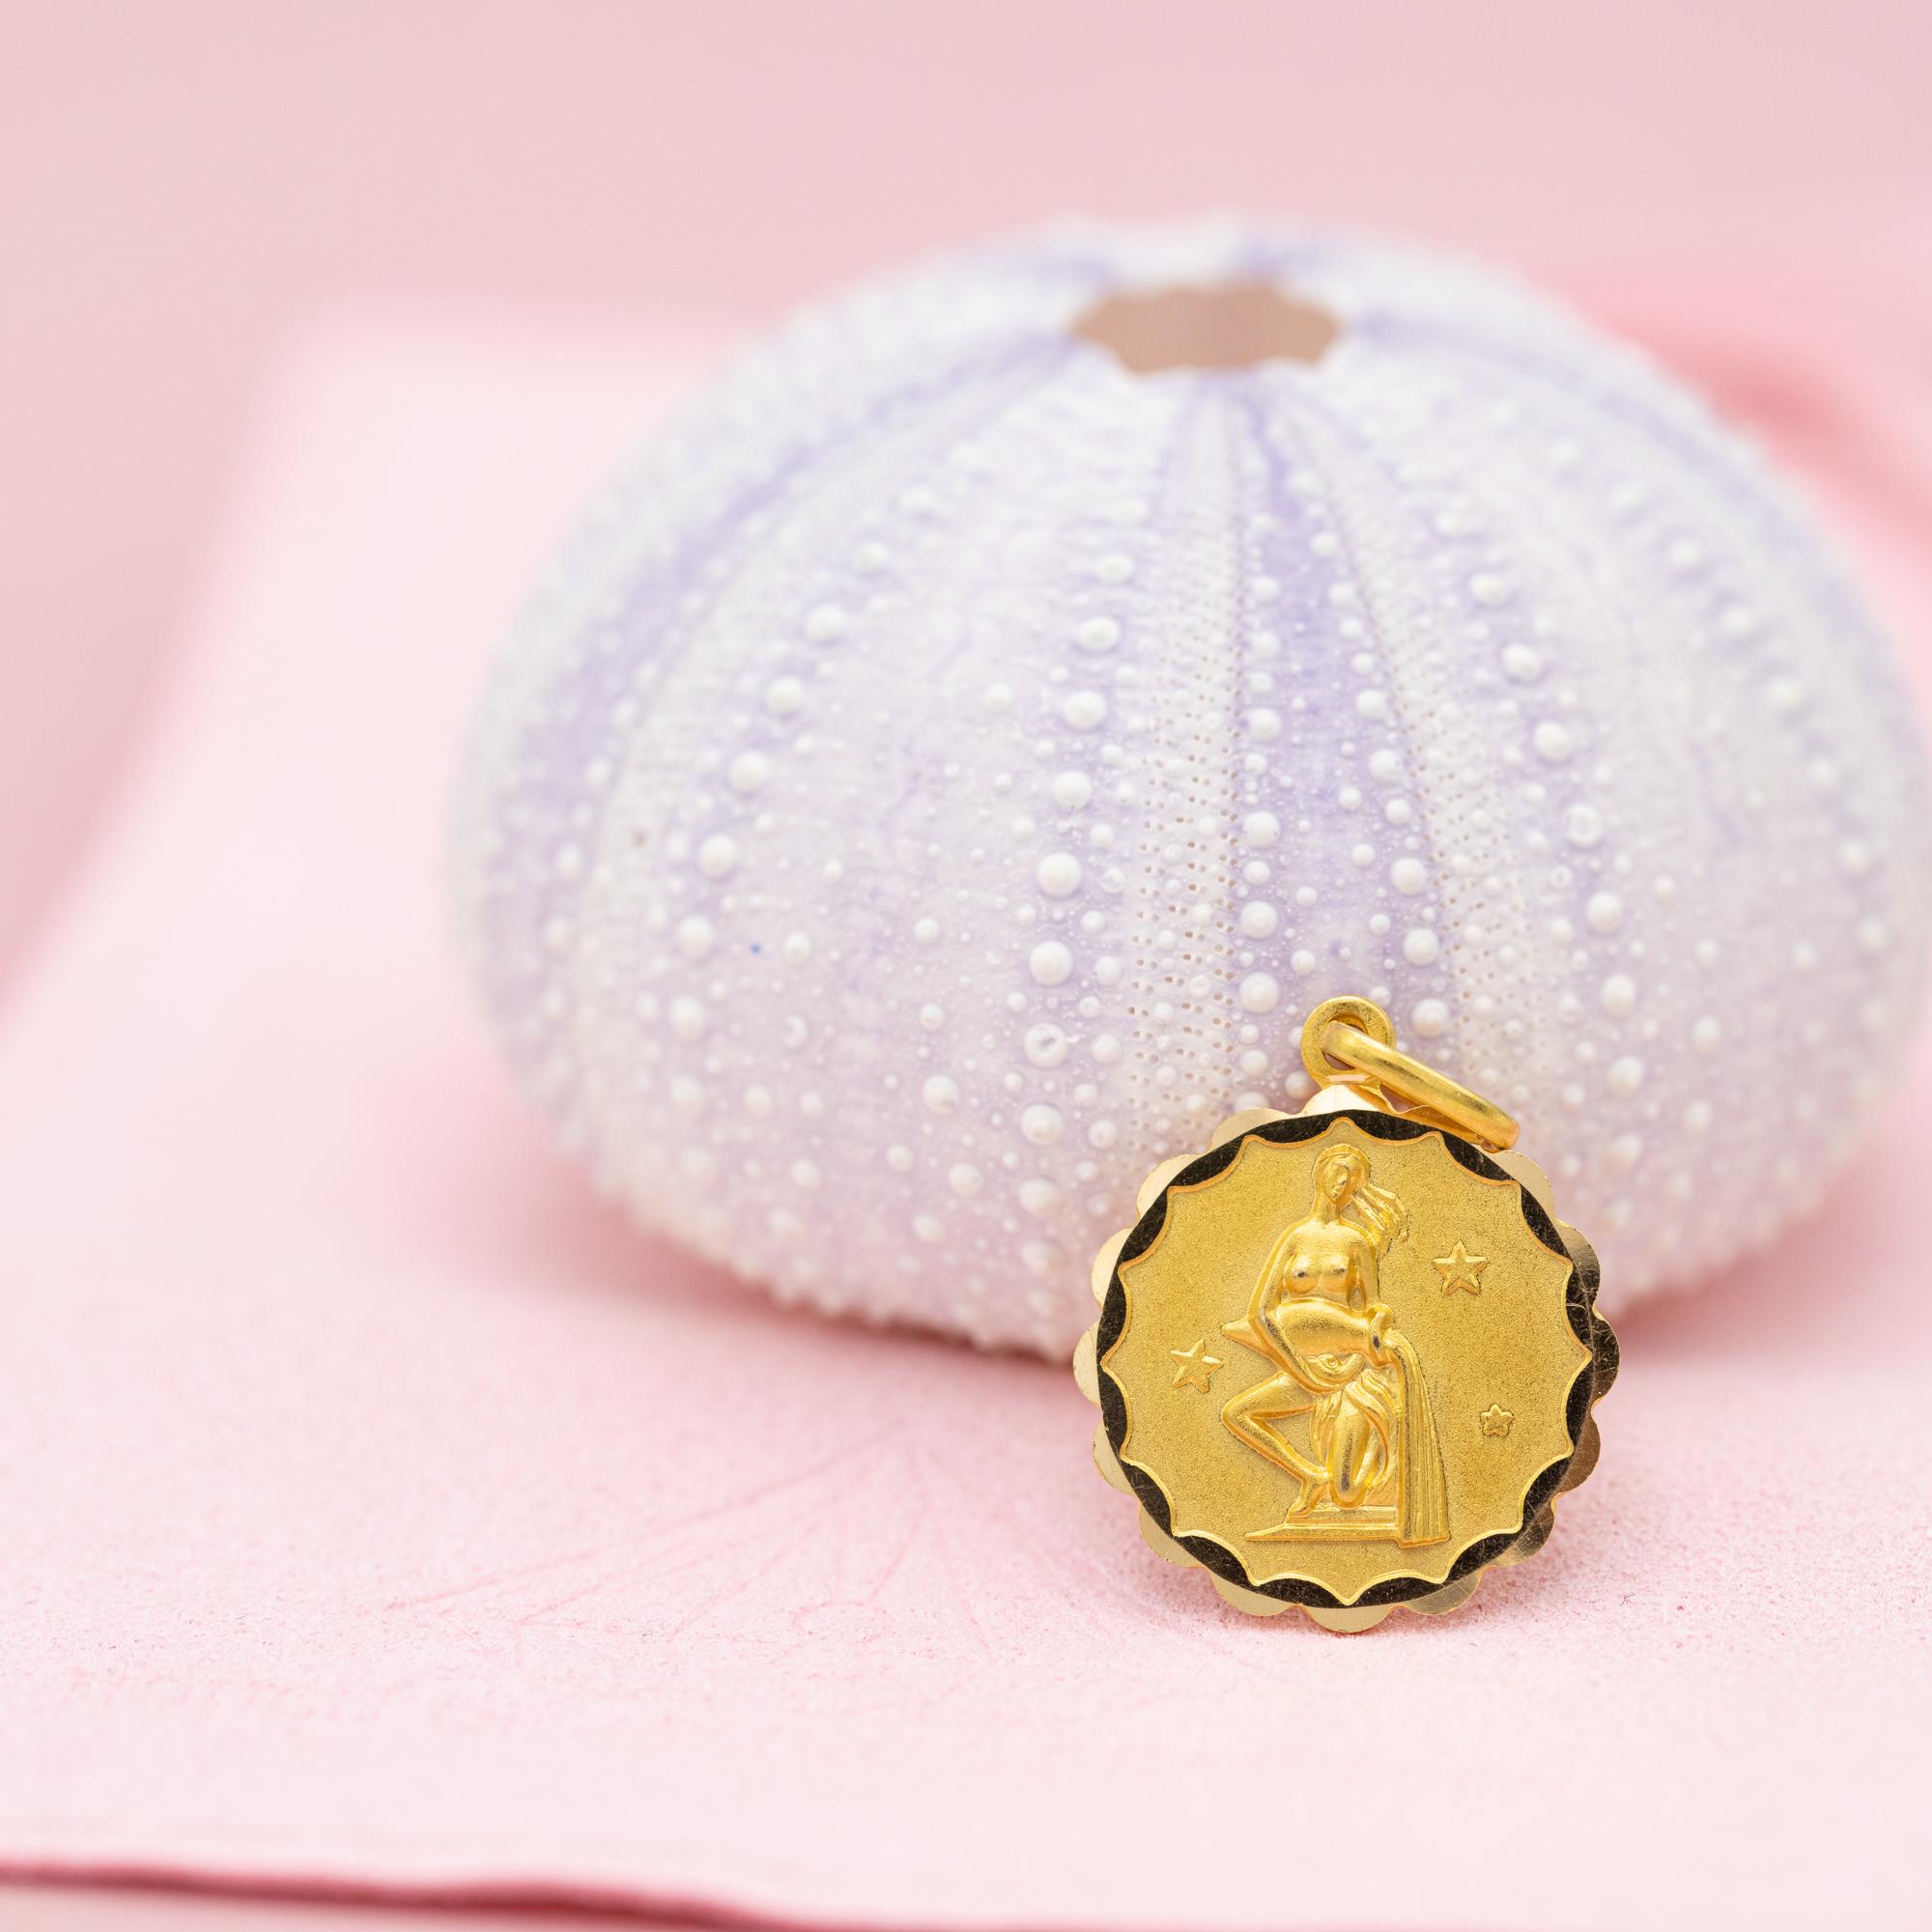 Vintage 18 k Italian zodiac charm pendant - Aquarius charm - solid yellow gold 2